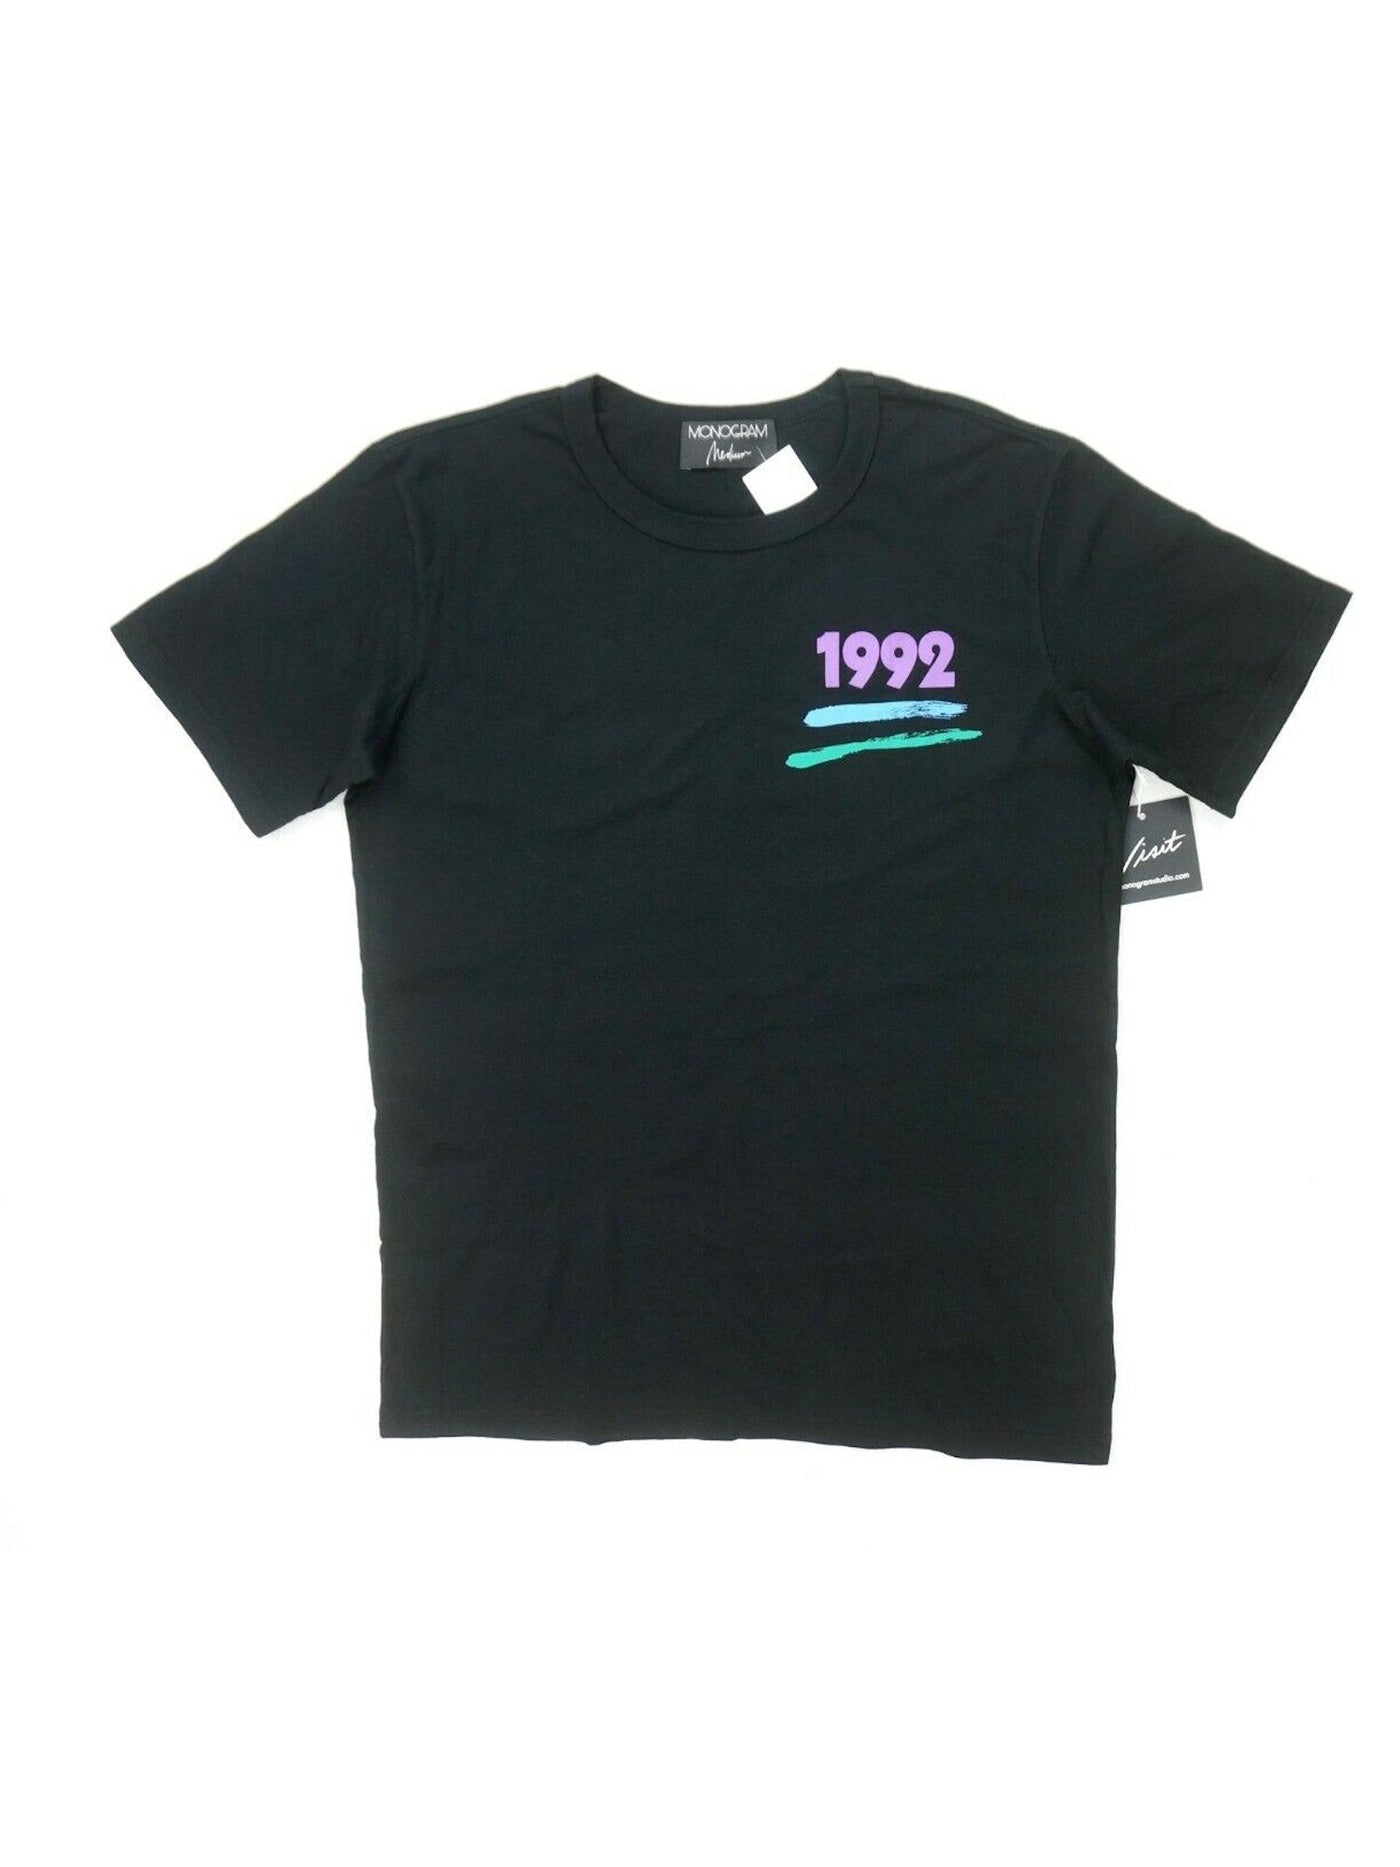 MONOGRAM Mens Black Lightweight, Graphic Short Sleeve Classic Fit T-Shirt S